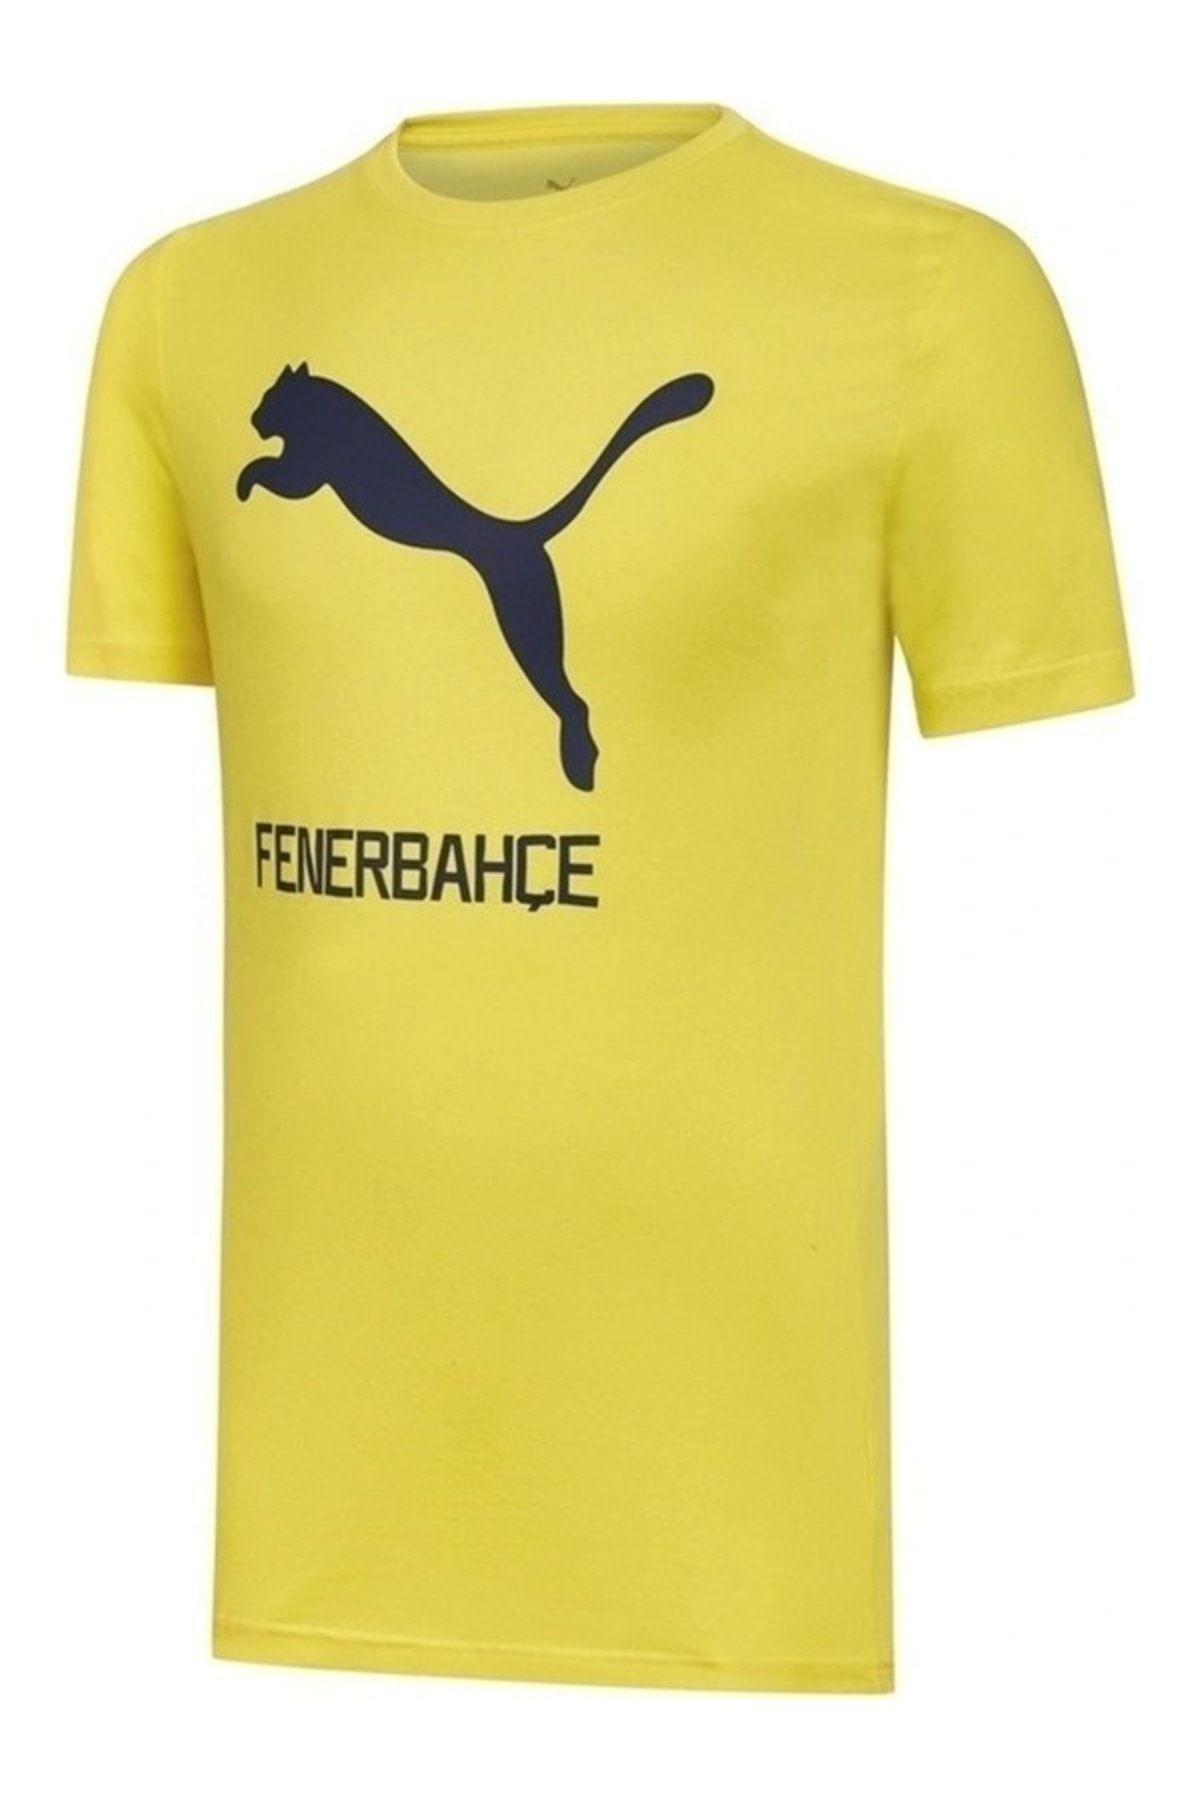 Fenerbahçe Puma Fenerbahçe Cat Tee Fenerbahçe Futbol Tişörtü 77313601